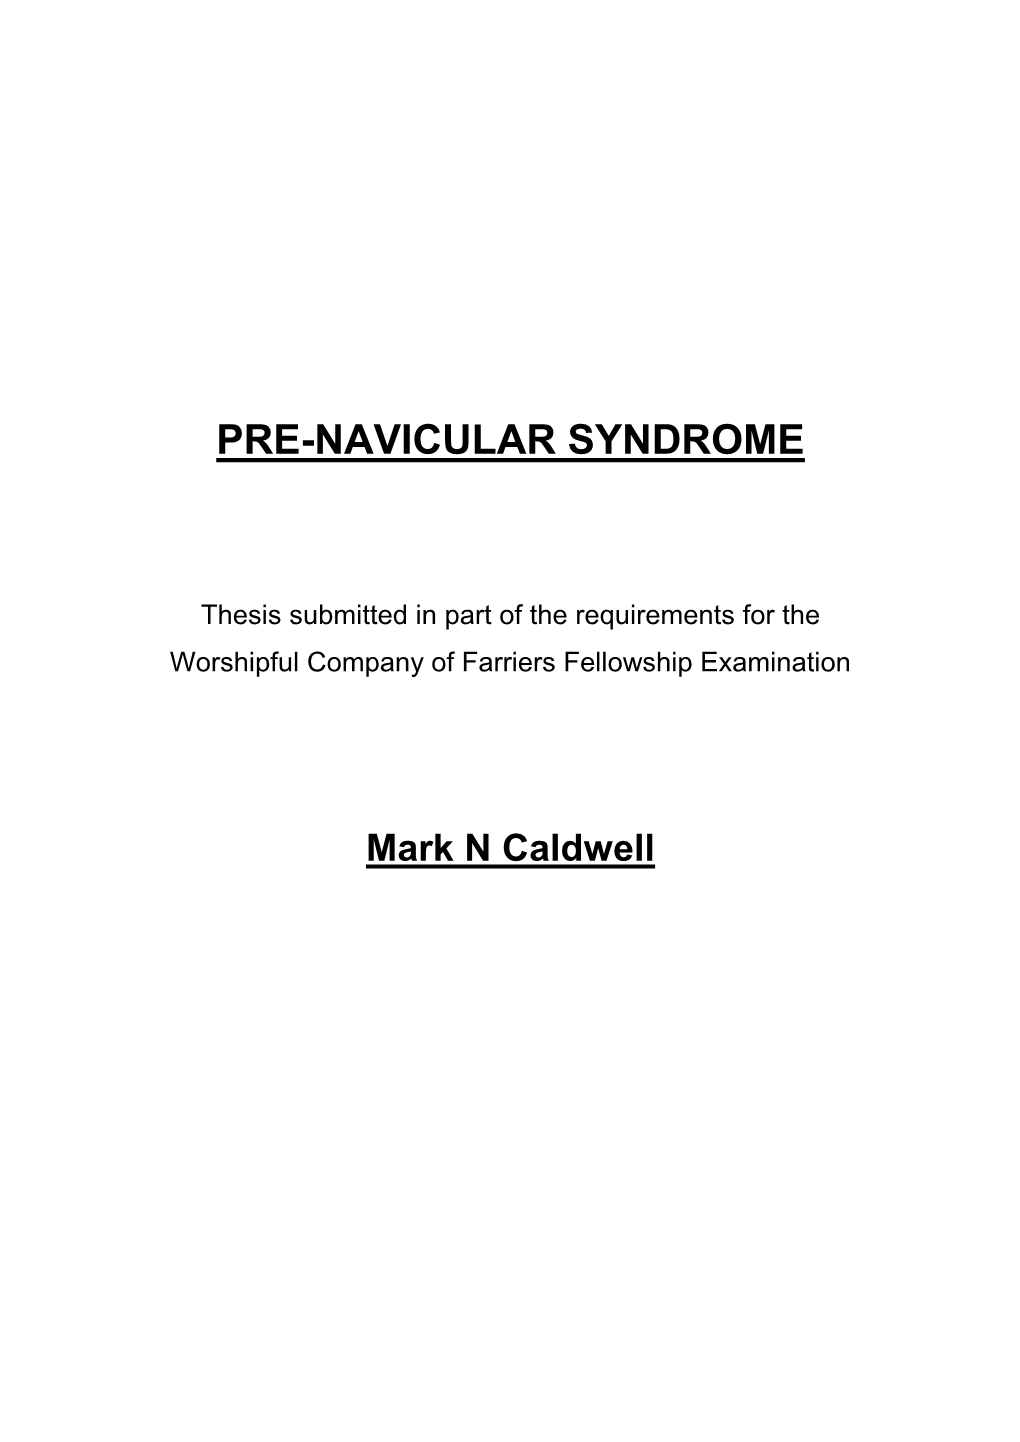 Pre-Navicular Syndrome